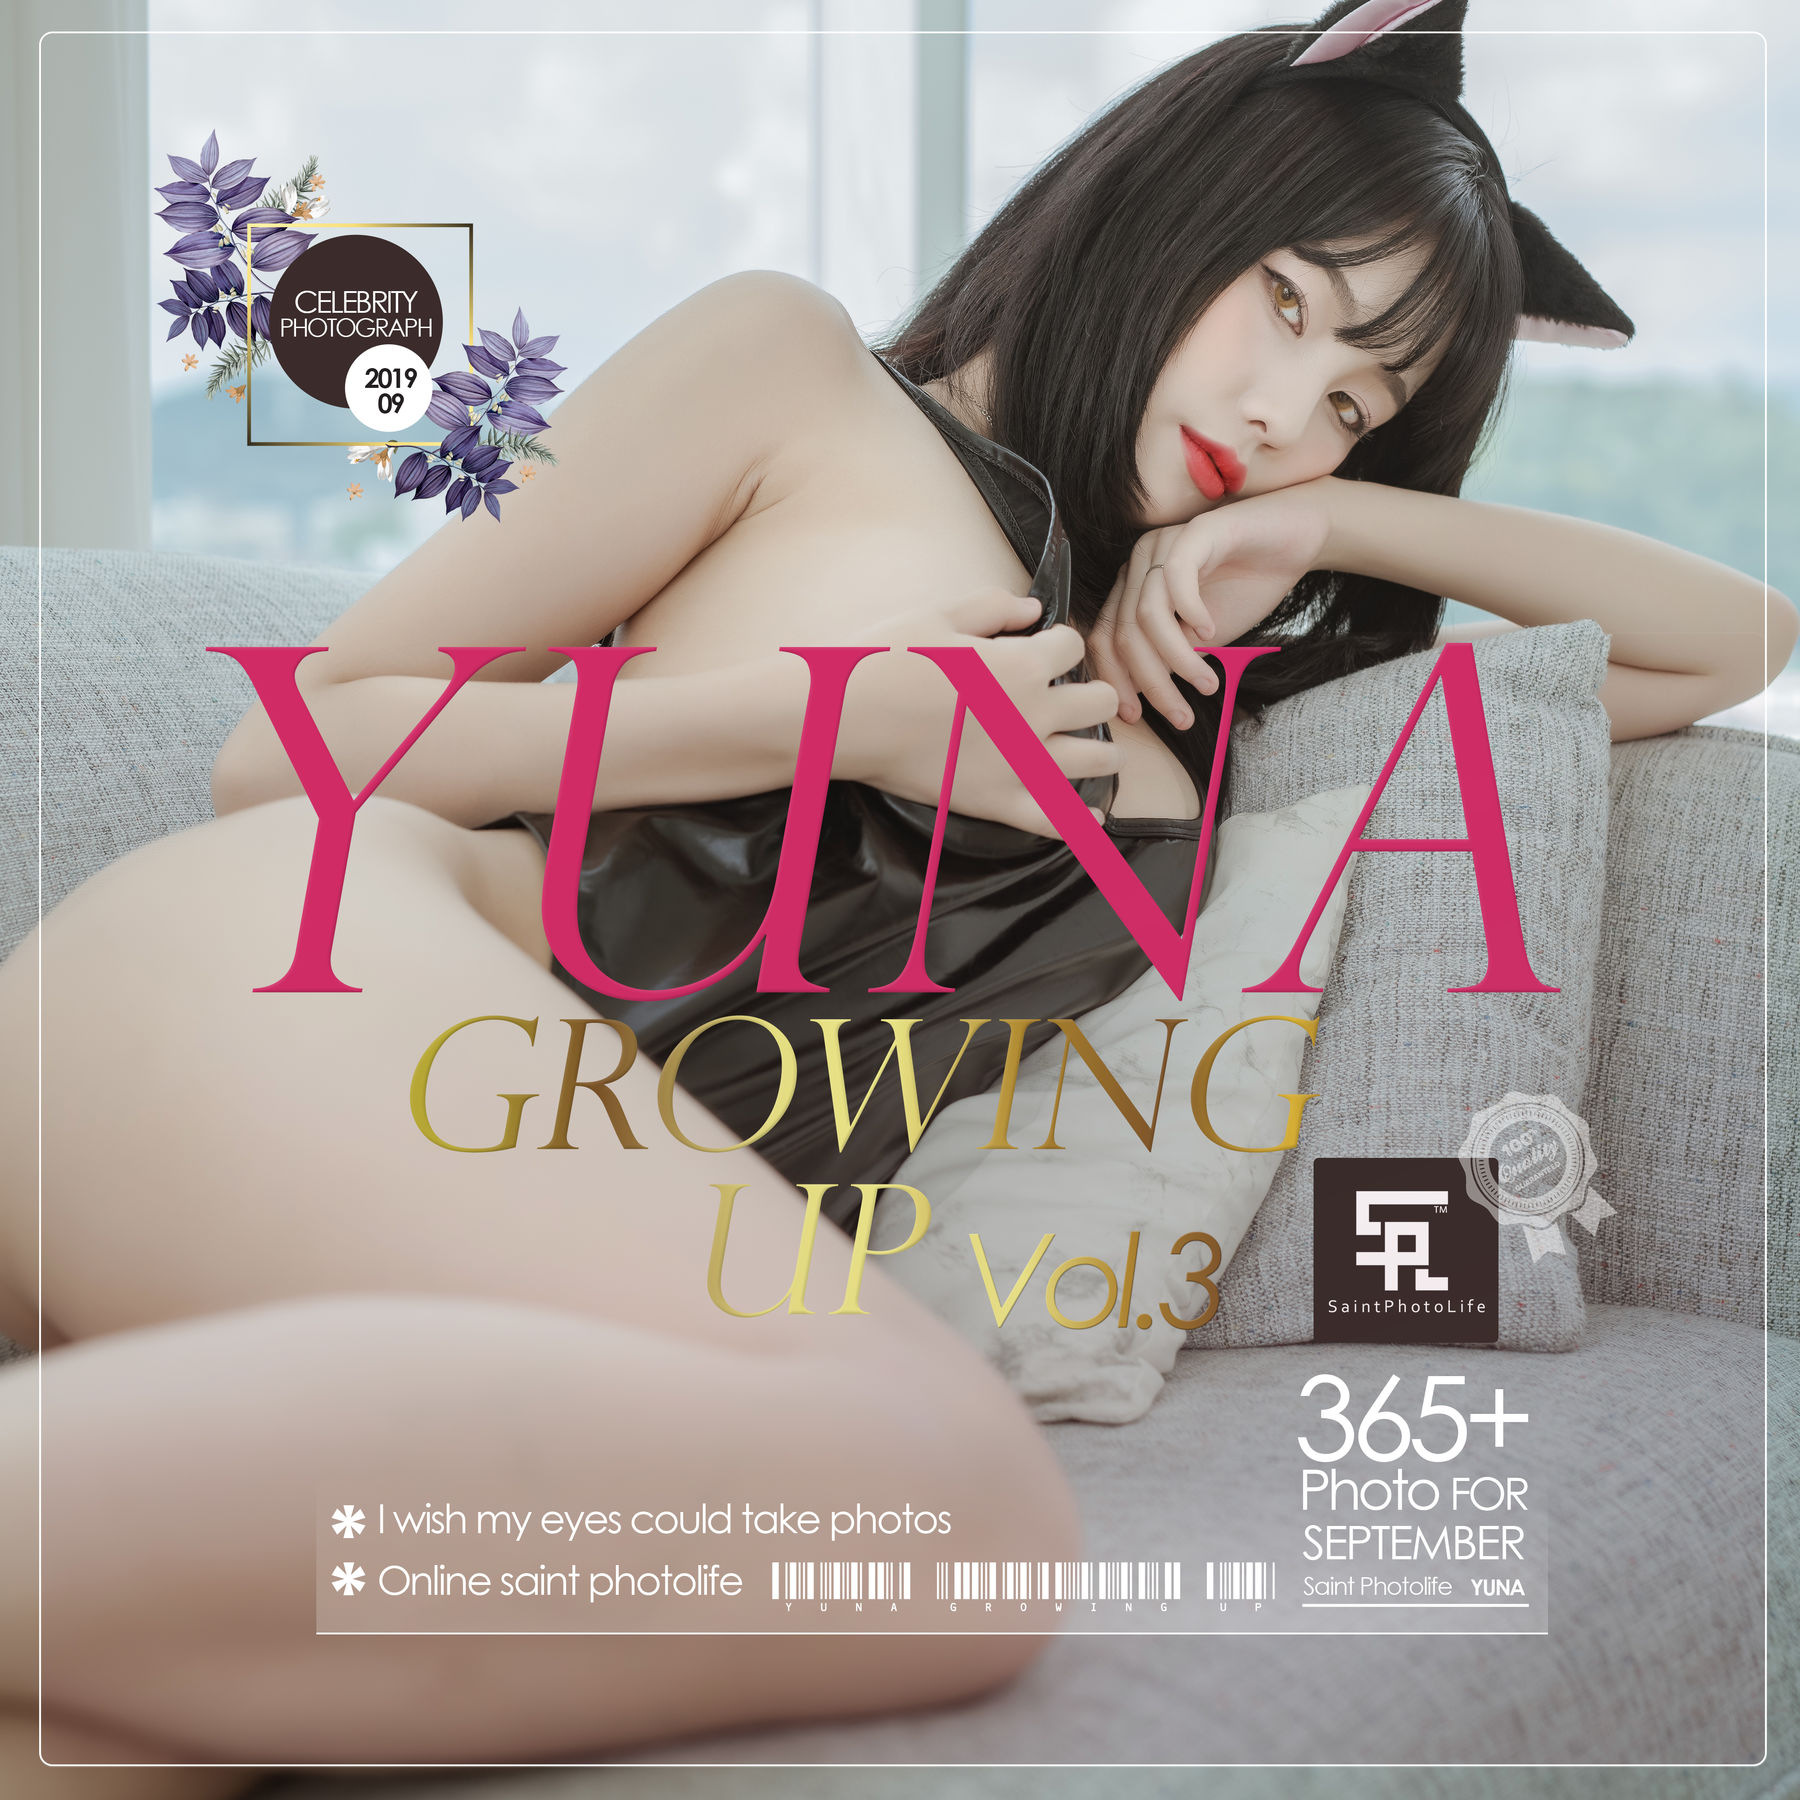 [saintphotolife] Yuna - Growing up Vol.3